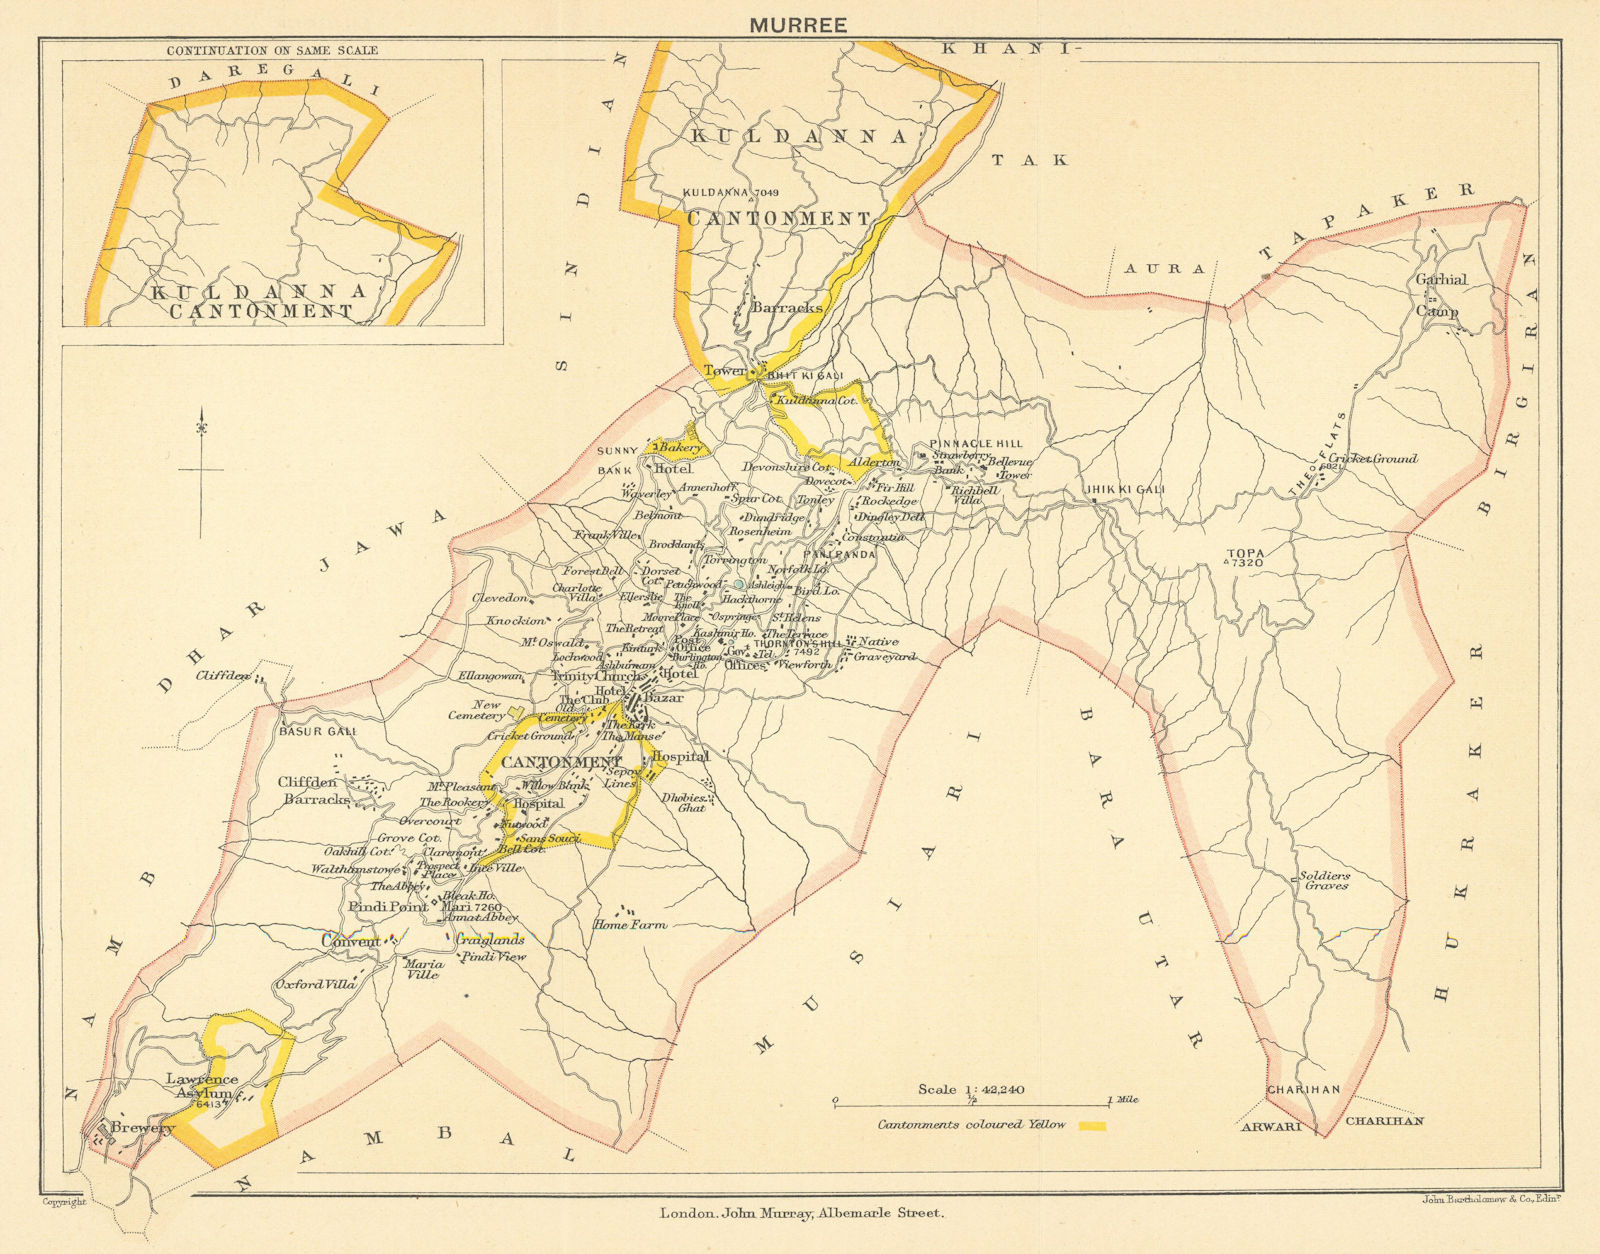 PAKISTAN. Murree Hill Station & Kuldanna Cantonment. British India 1905 map